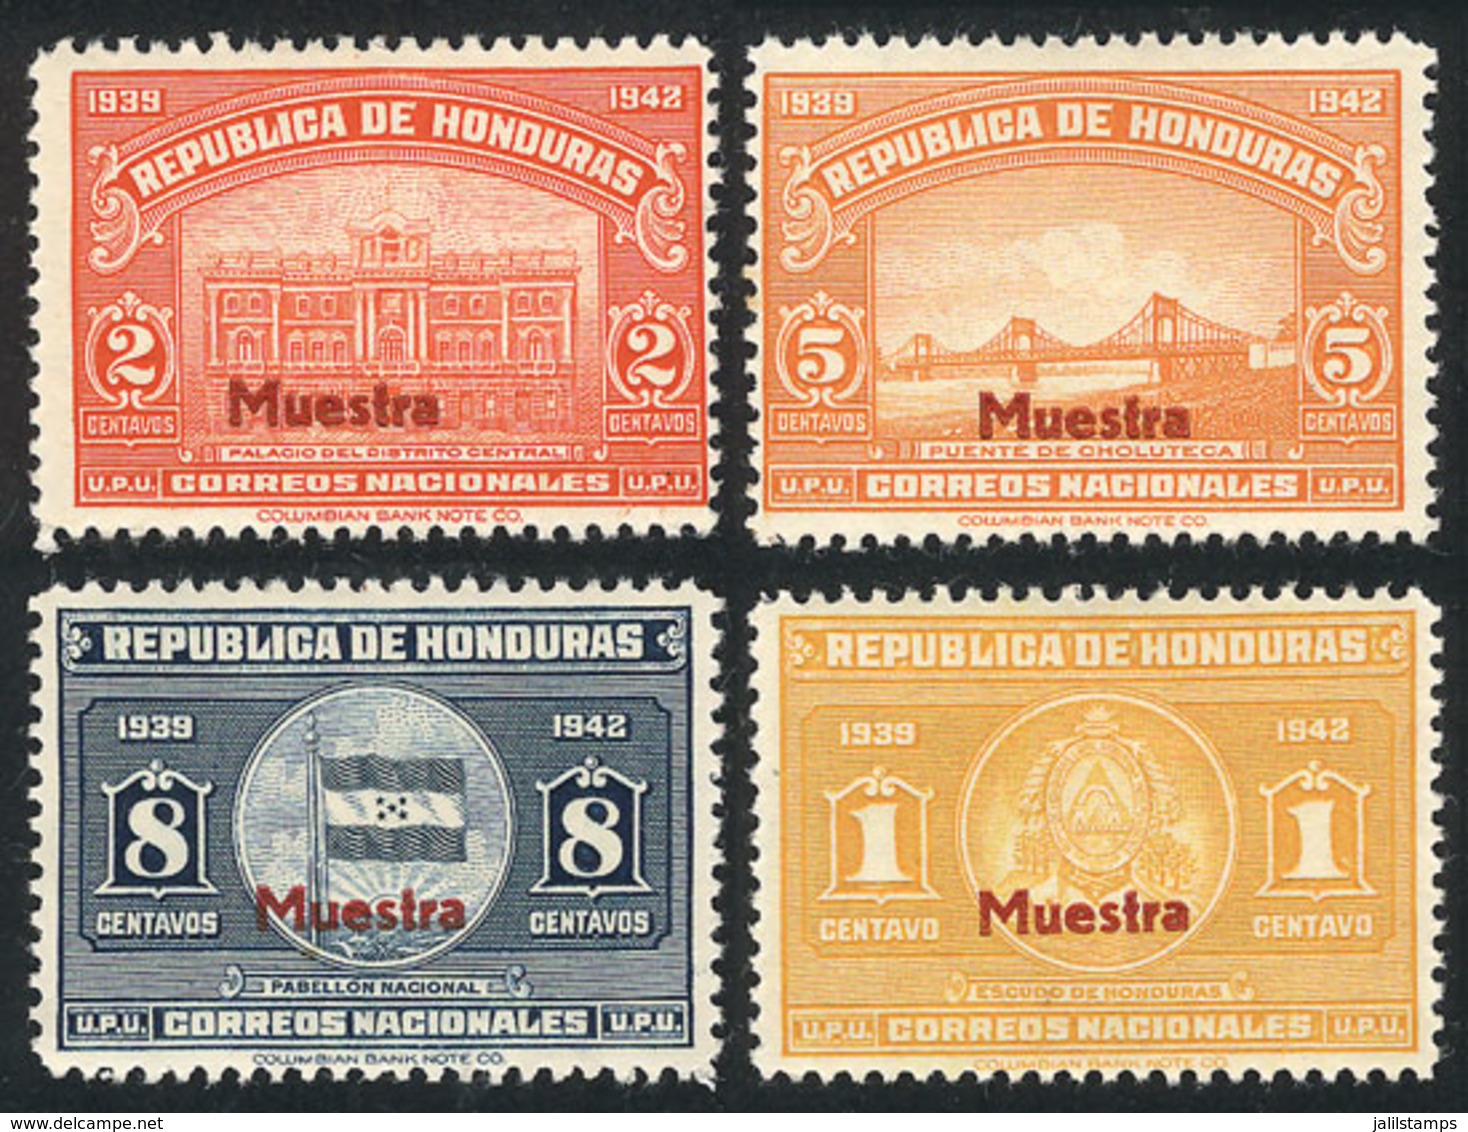 HONDURAS: 4 Stamps With MUESTRA Overprint, Very Fine Quality, Interesting! - Honduras